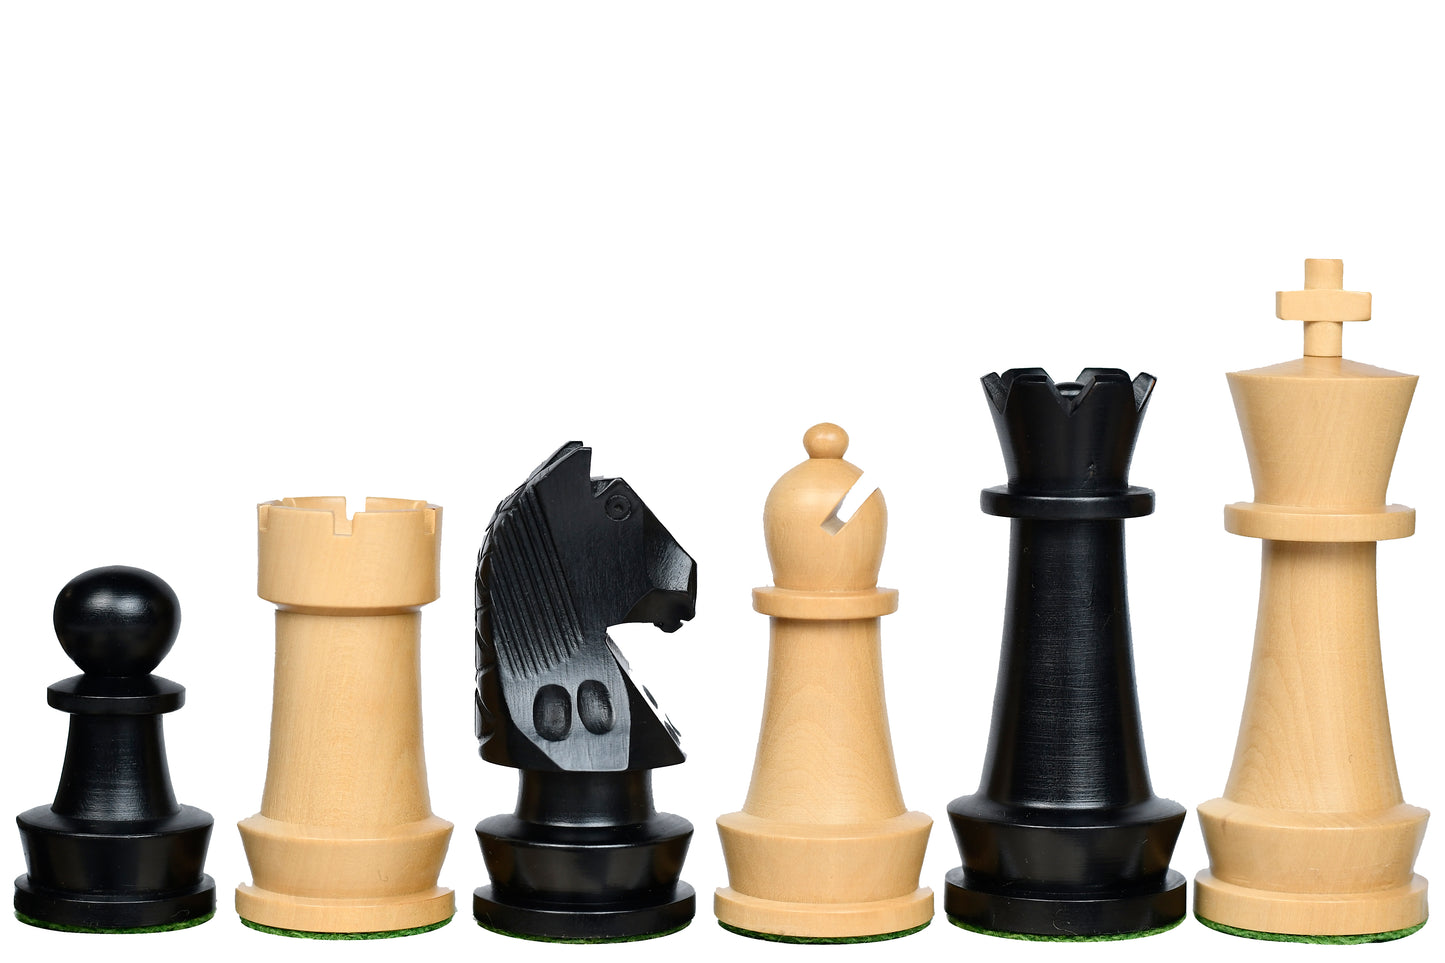 The Championship Series Staunton Chess Pieces in Ebonized Boxwood & Natural Boxwood - 3.75" King